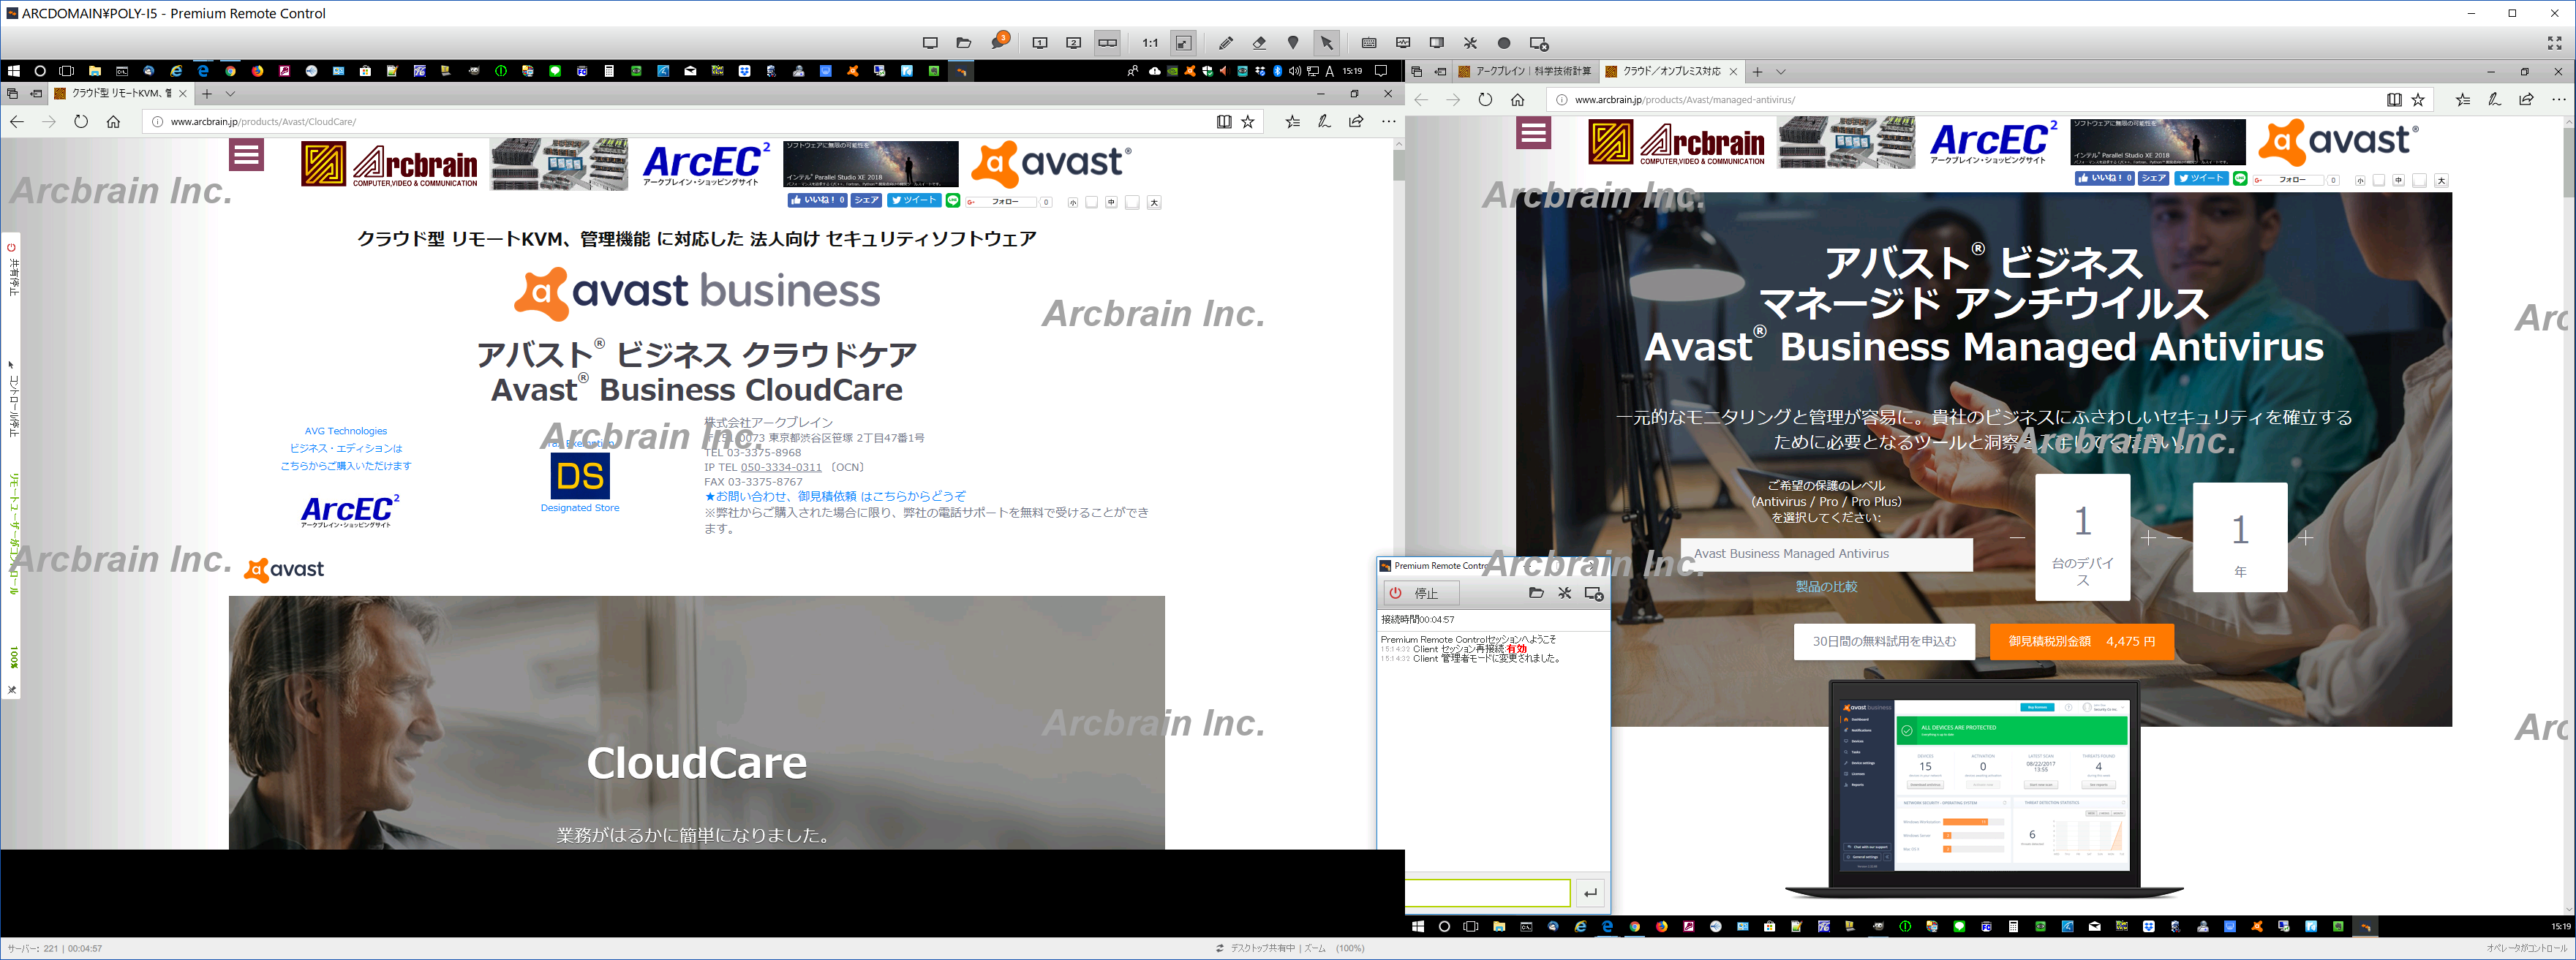 Avast Business CloudCare - Console Premium Remote - FHD + UXGA screen